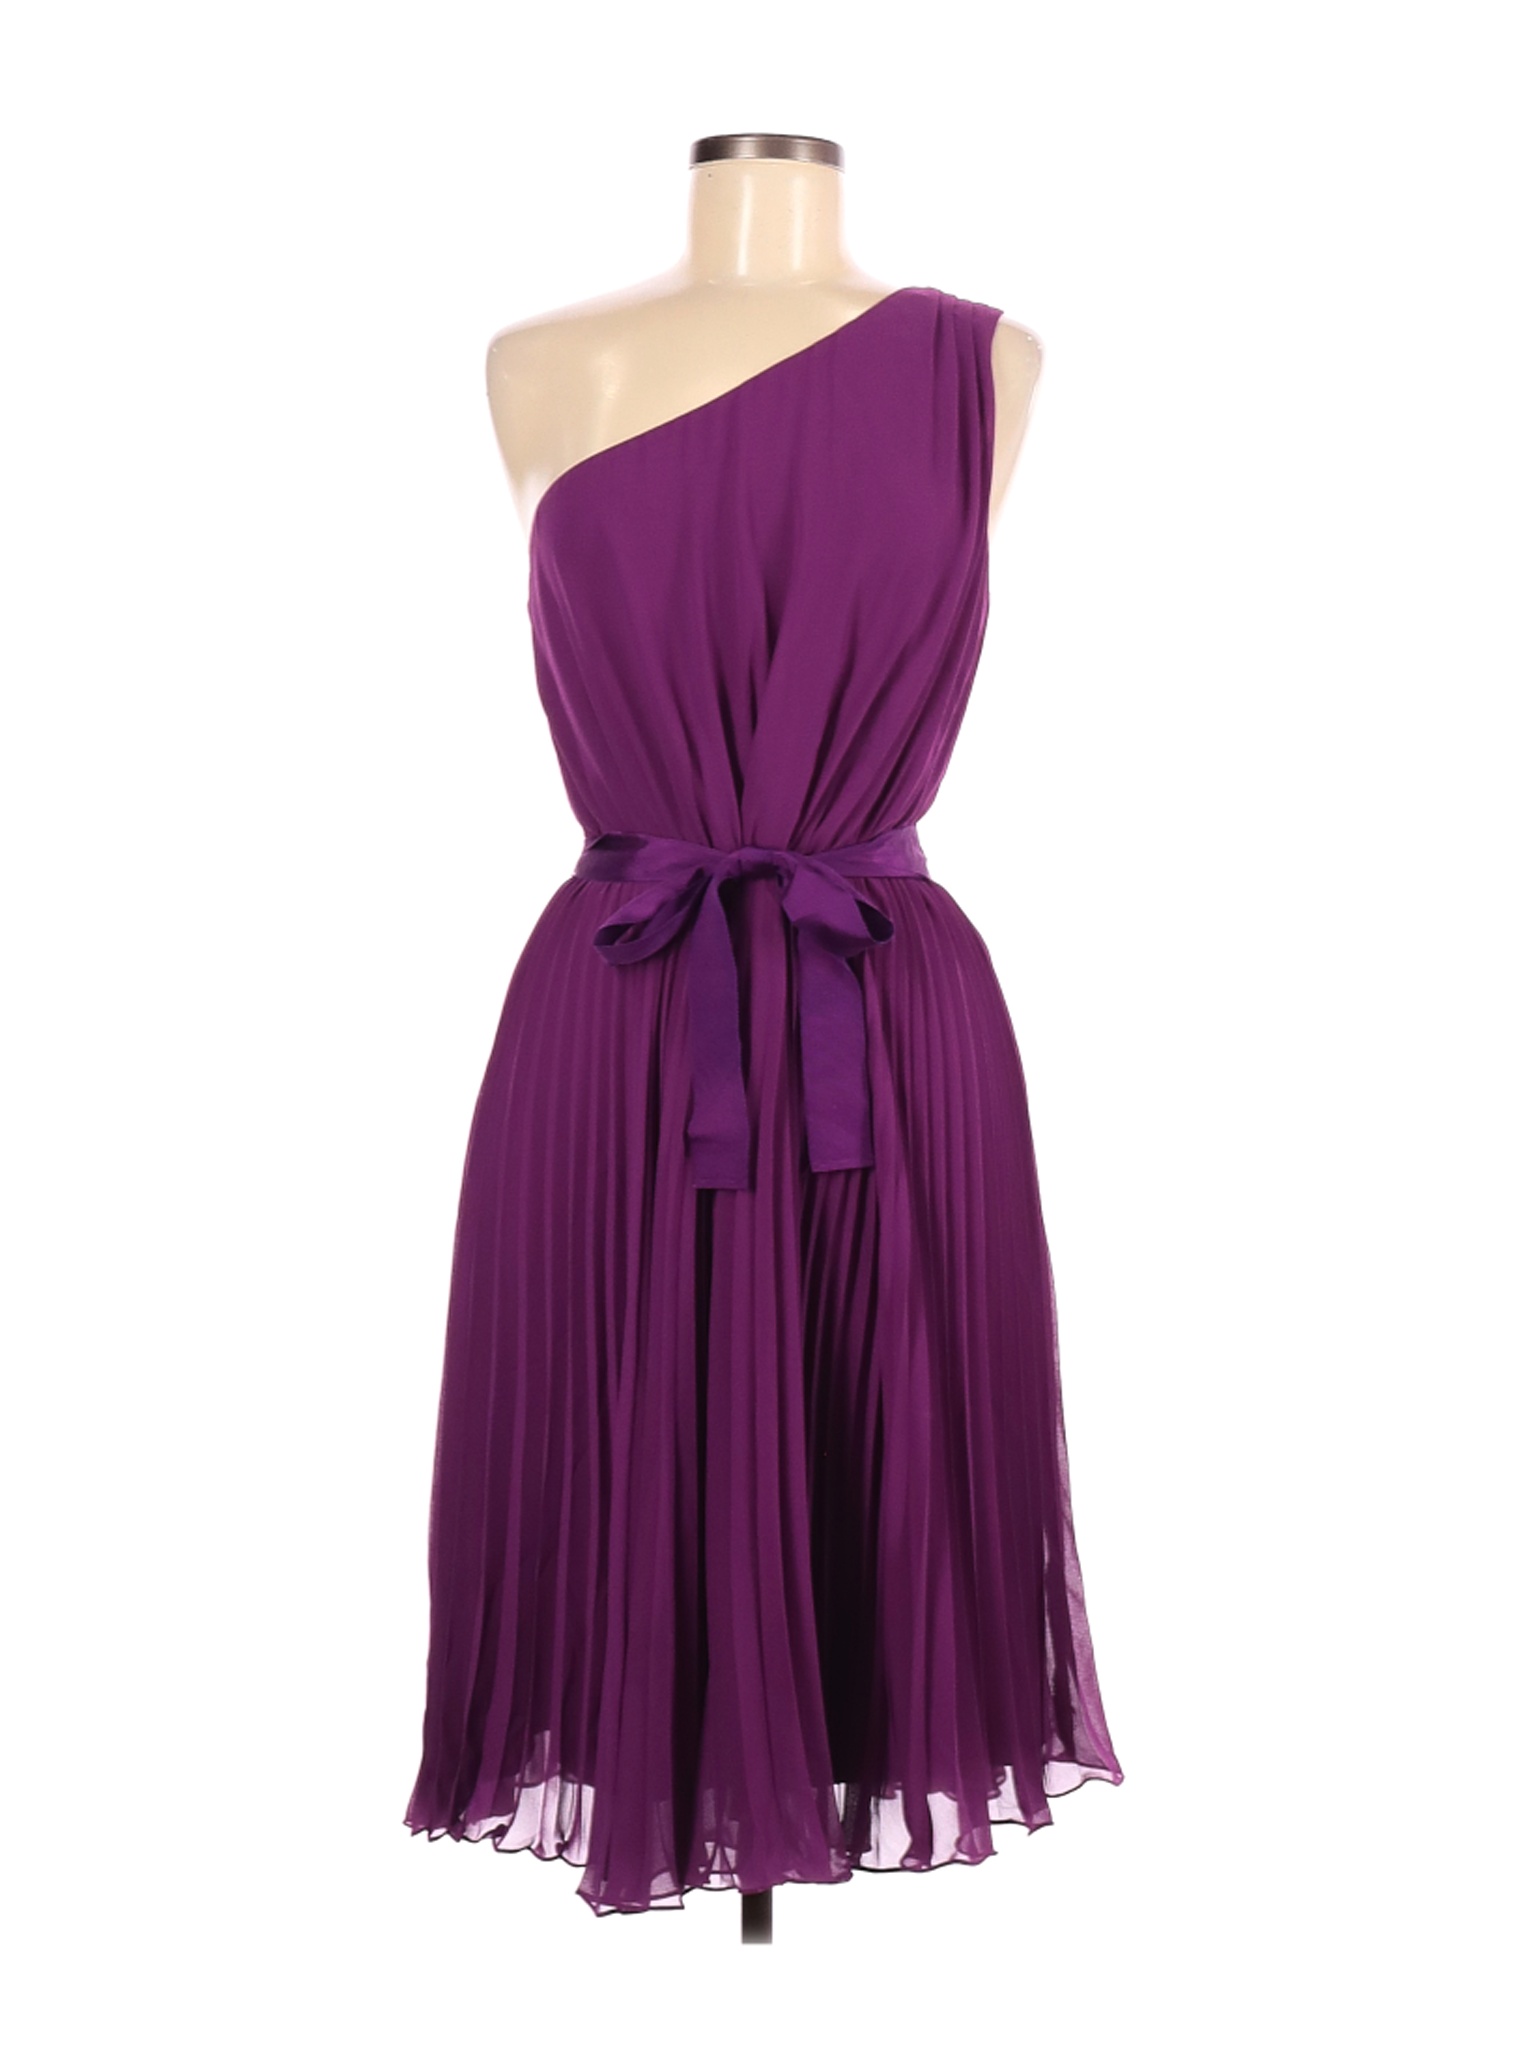 The Limited Women Purple Cocktail Dress 8 | eBay